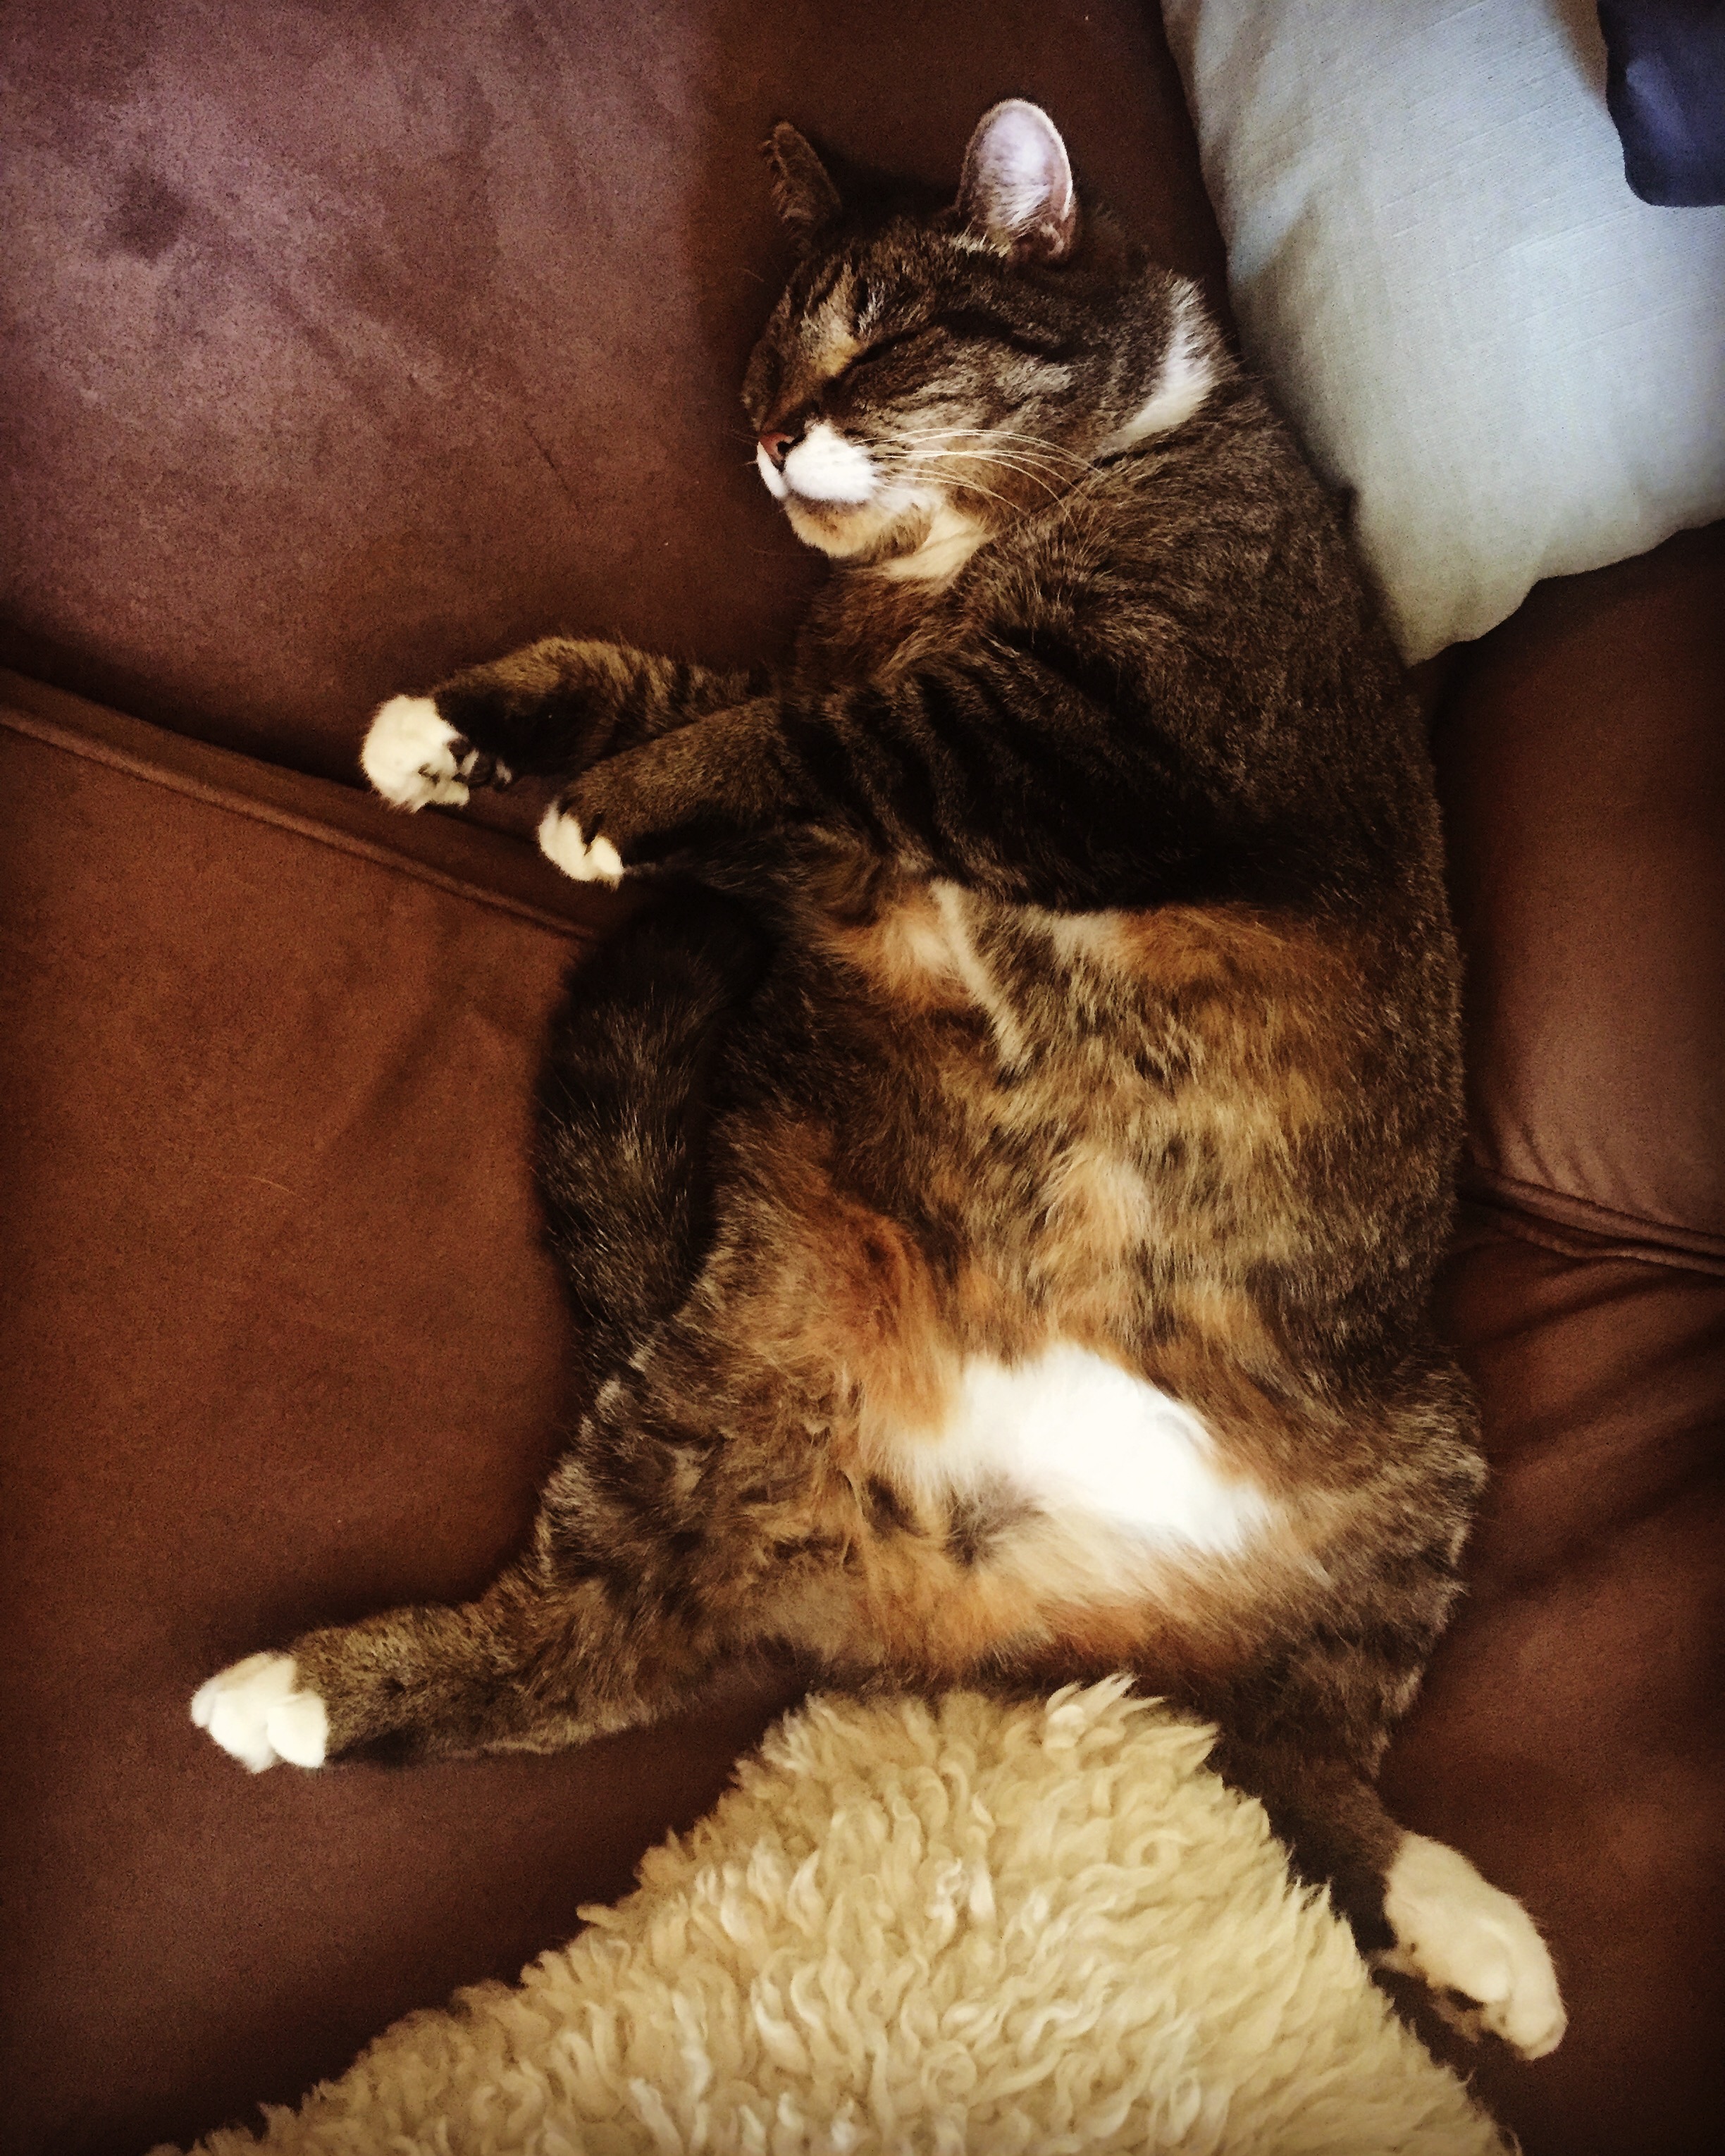 Ralph enjoying a cat nap after his move to Australia 